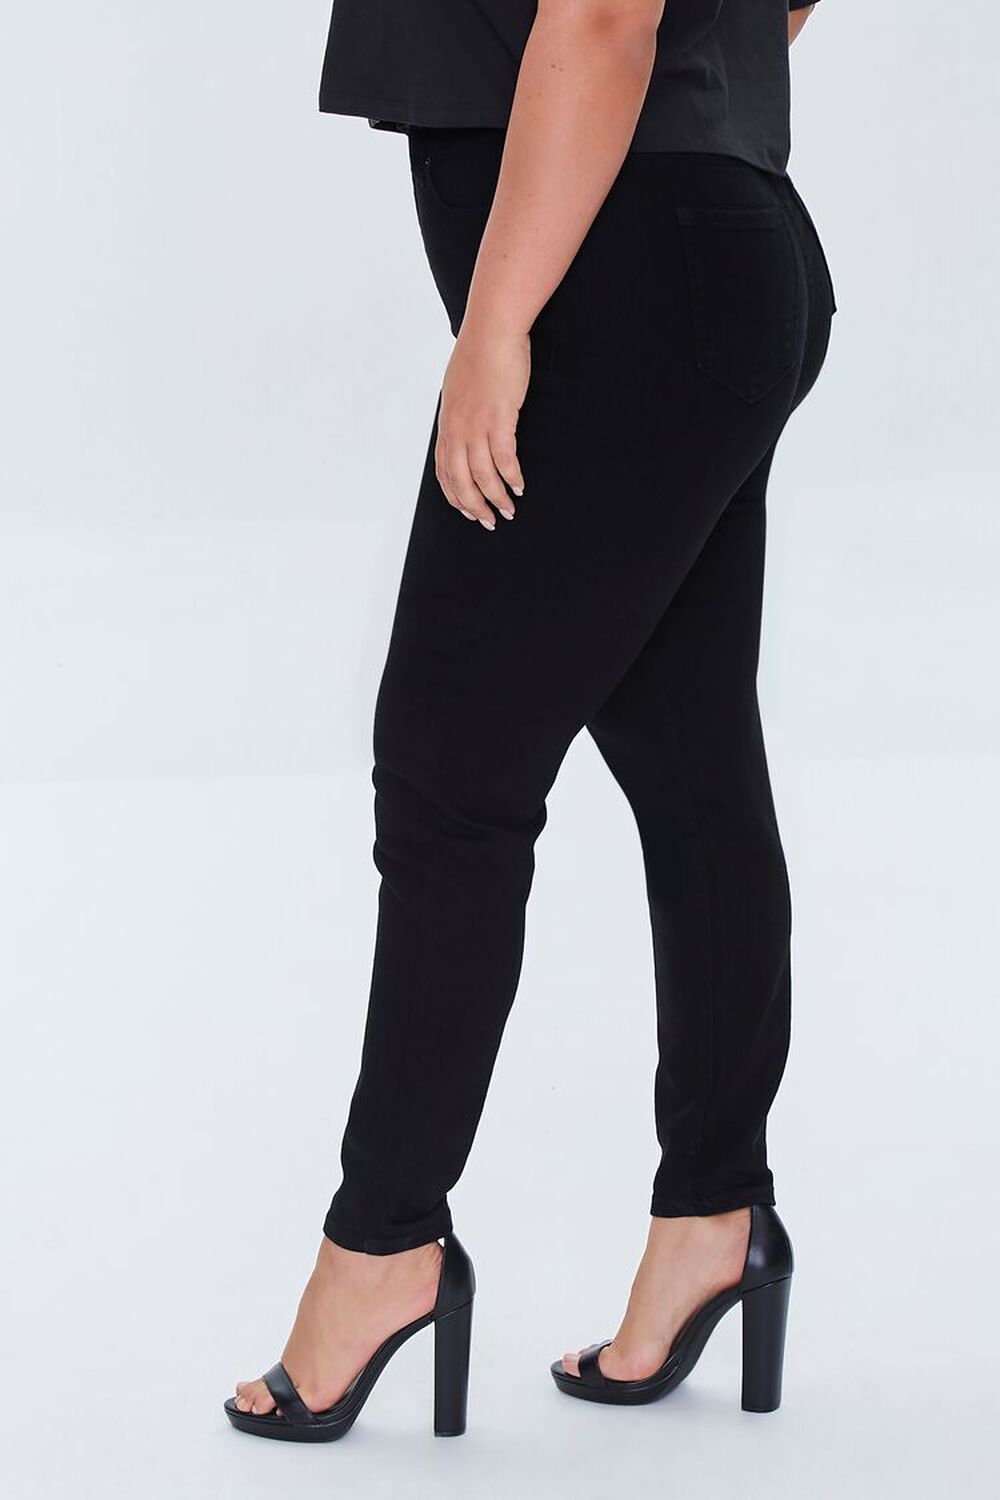 BLACK Plus Size High-Rise Skinny Jeans, image 3